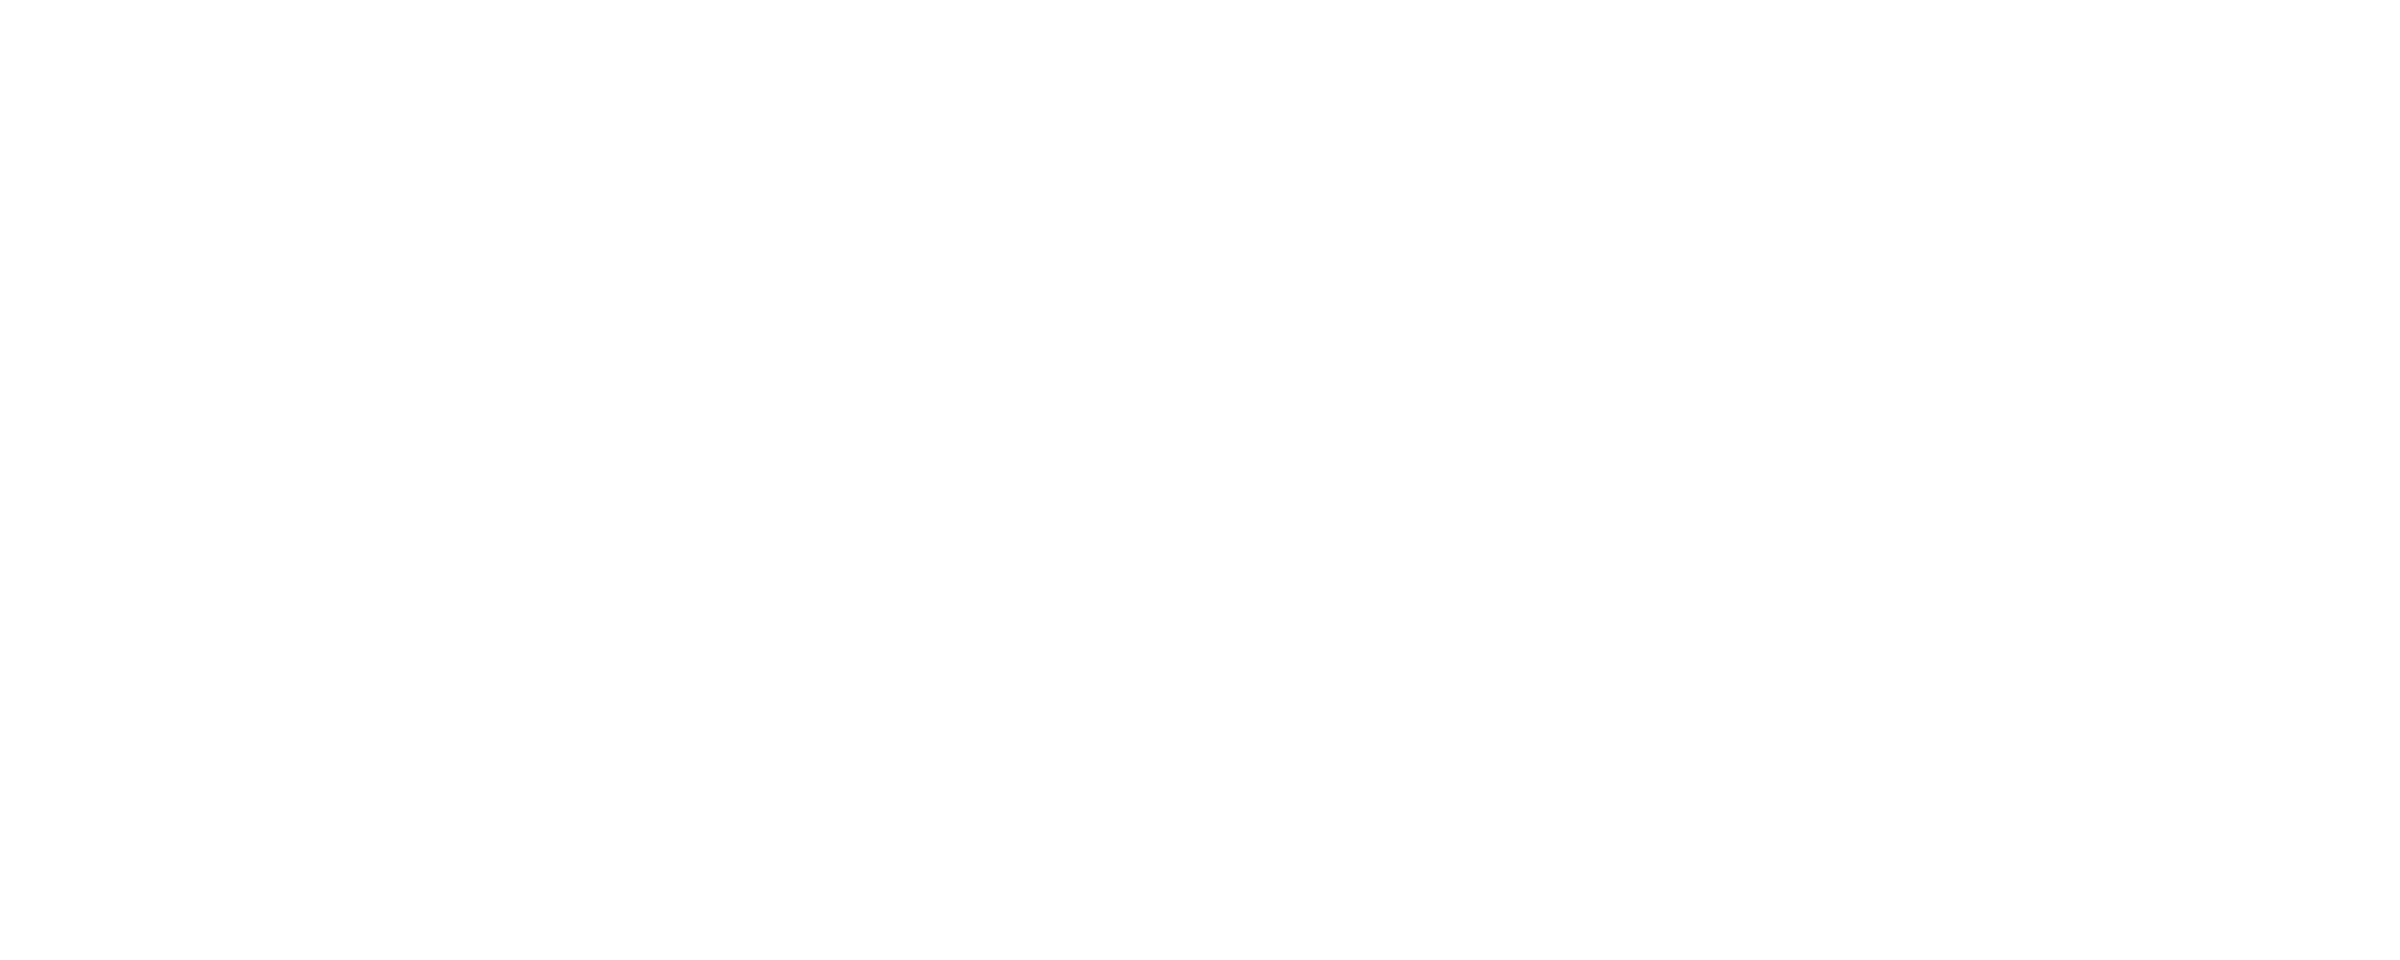 SERENE logo